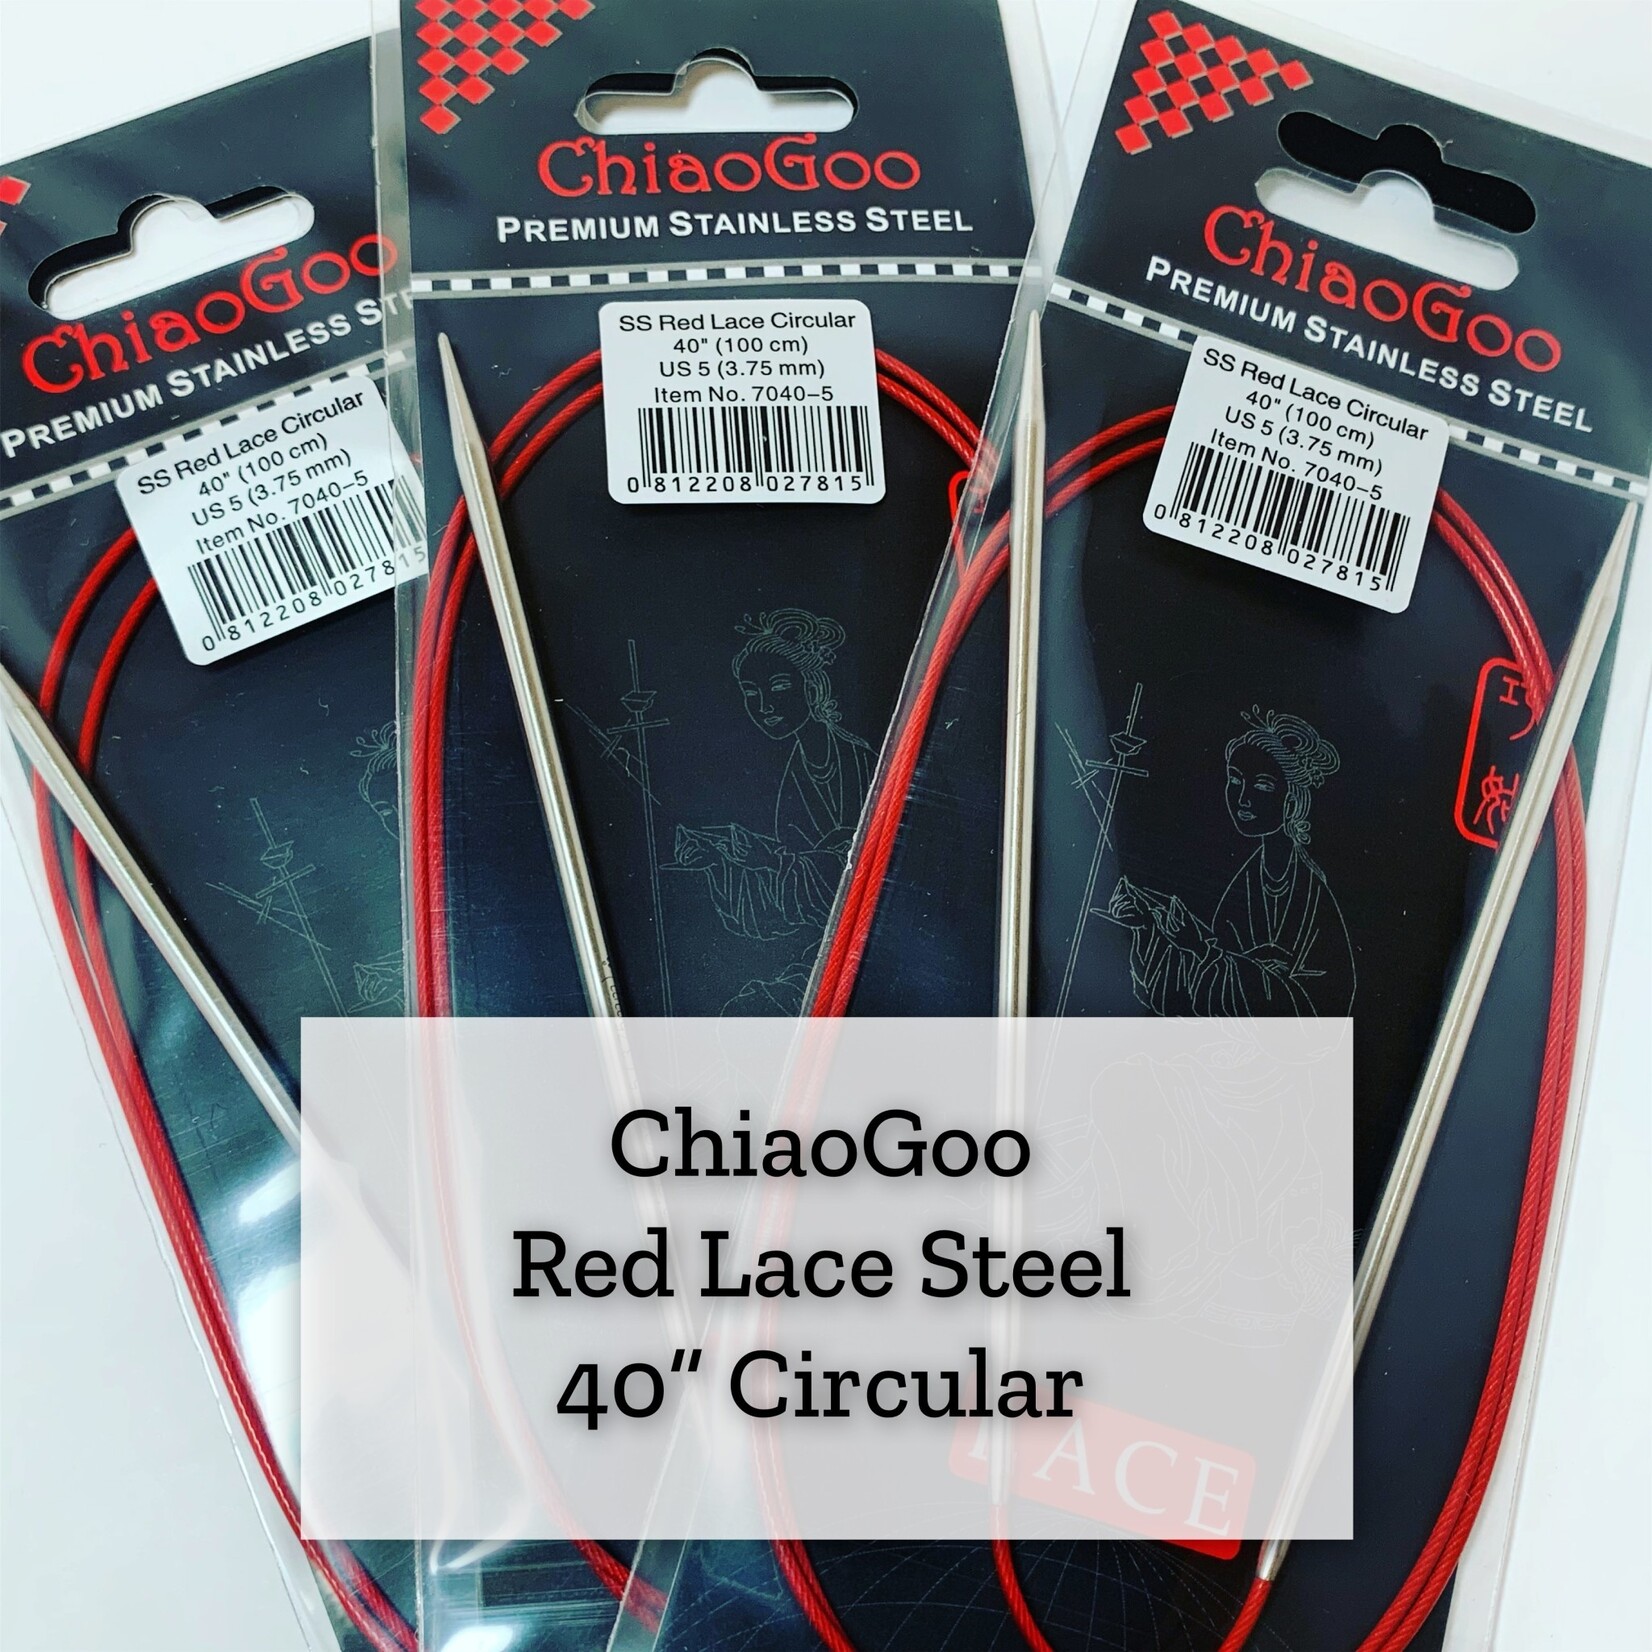 ChiaoGoo Red Lace Steel - 40" 6 mm